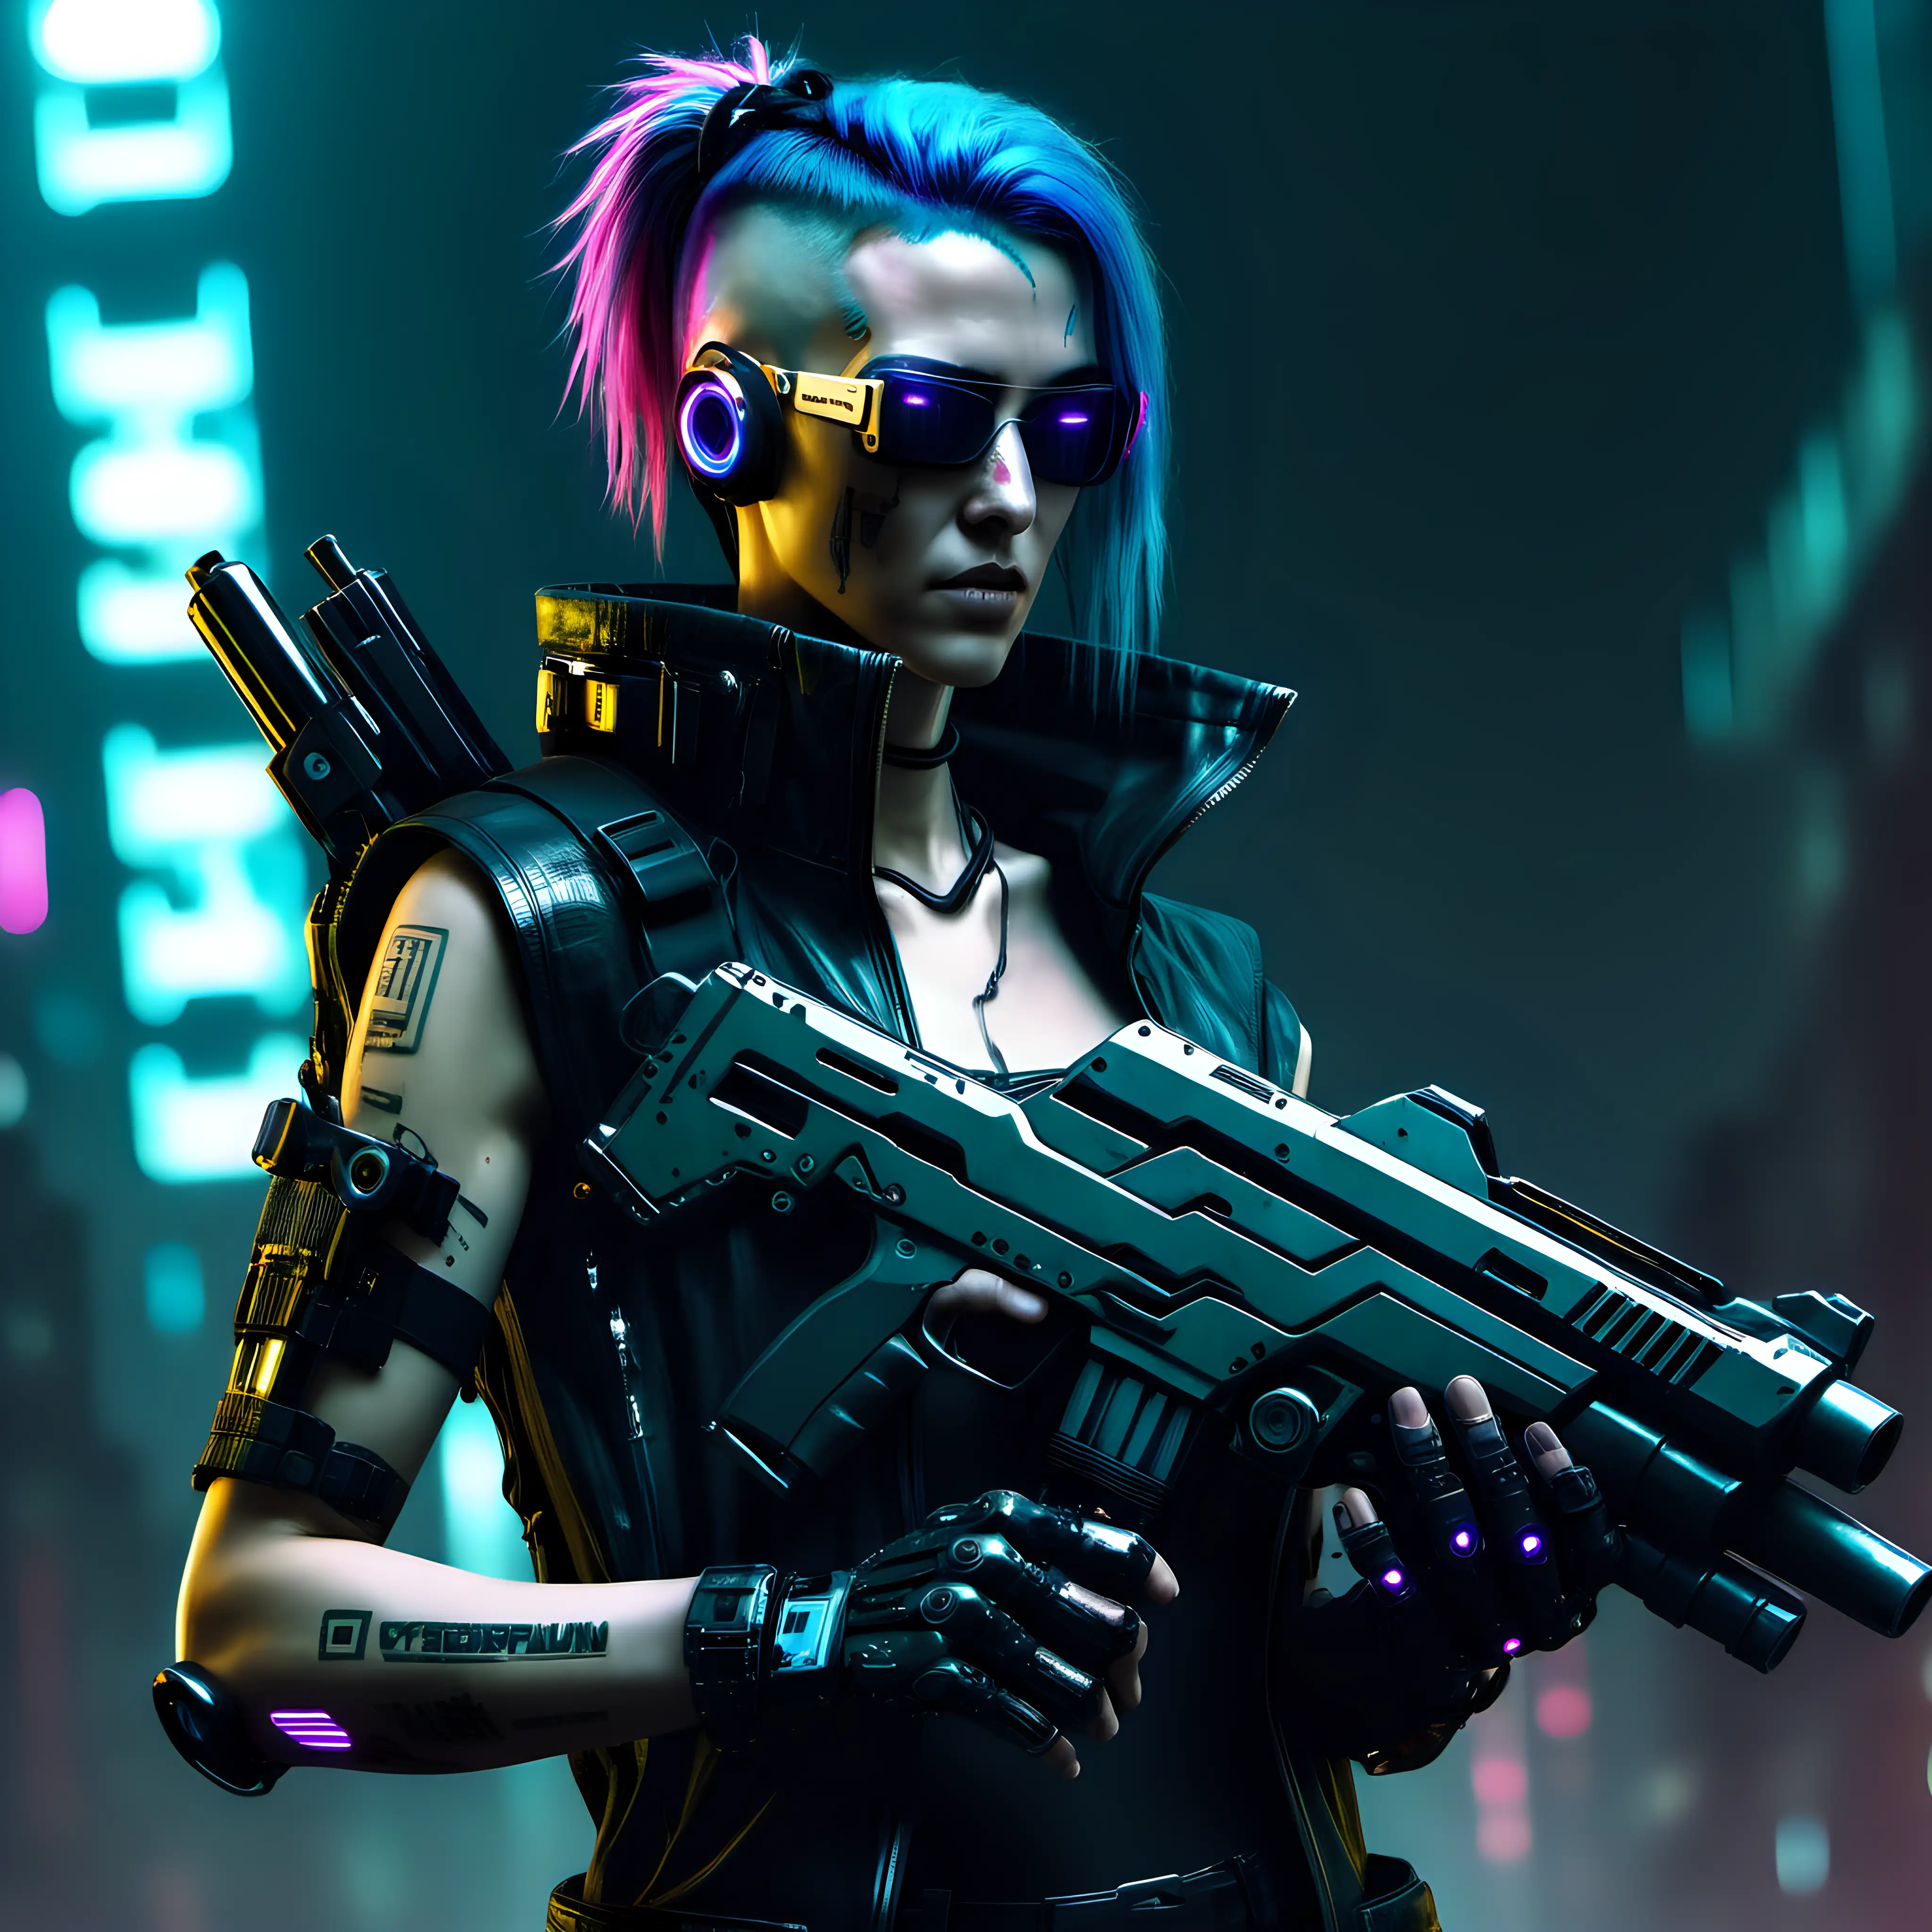 Futuristic Cyberpunk Warriors with HighTech Firearms